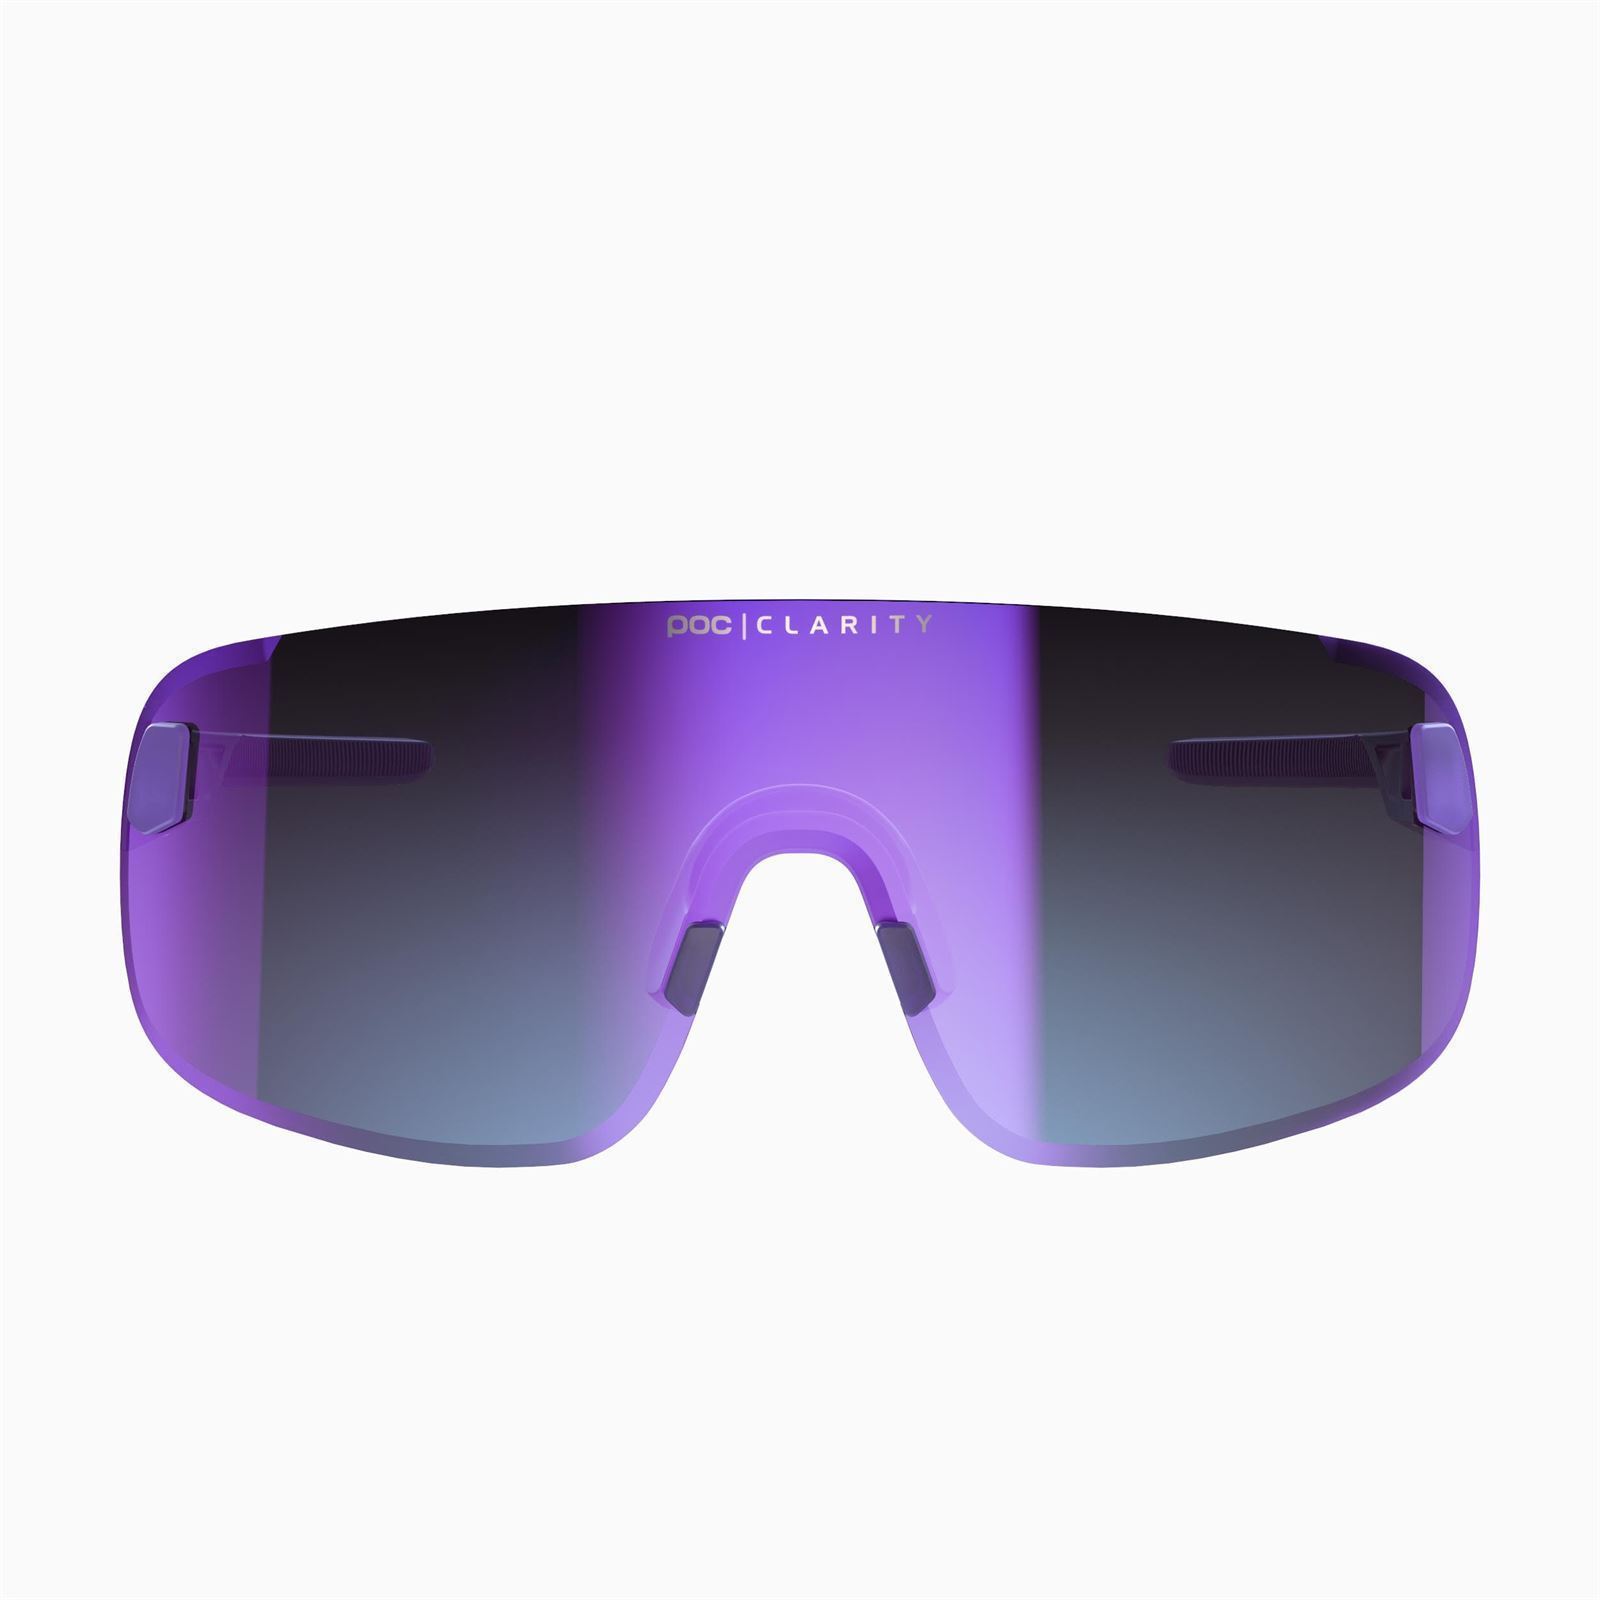 Gafas POC ELICIT "Sapphire Purple Translucent / Lente: Clarity Define Violet Mirror" - SUPER PRECIO!!!! - Imagen 2